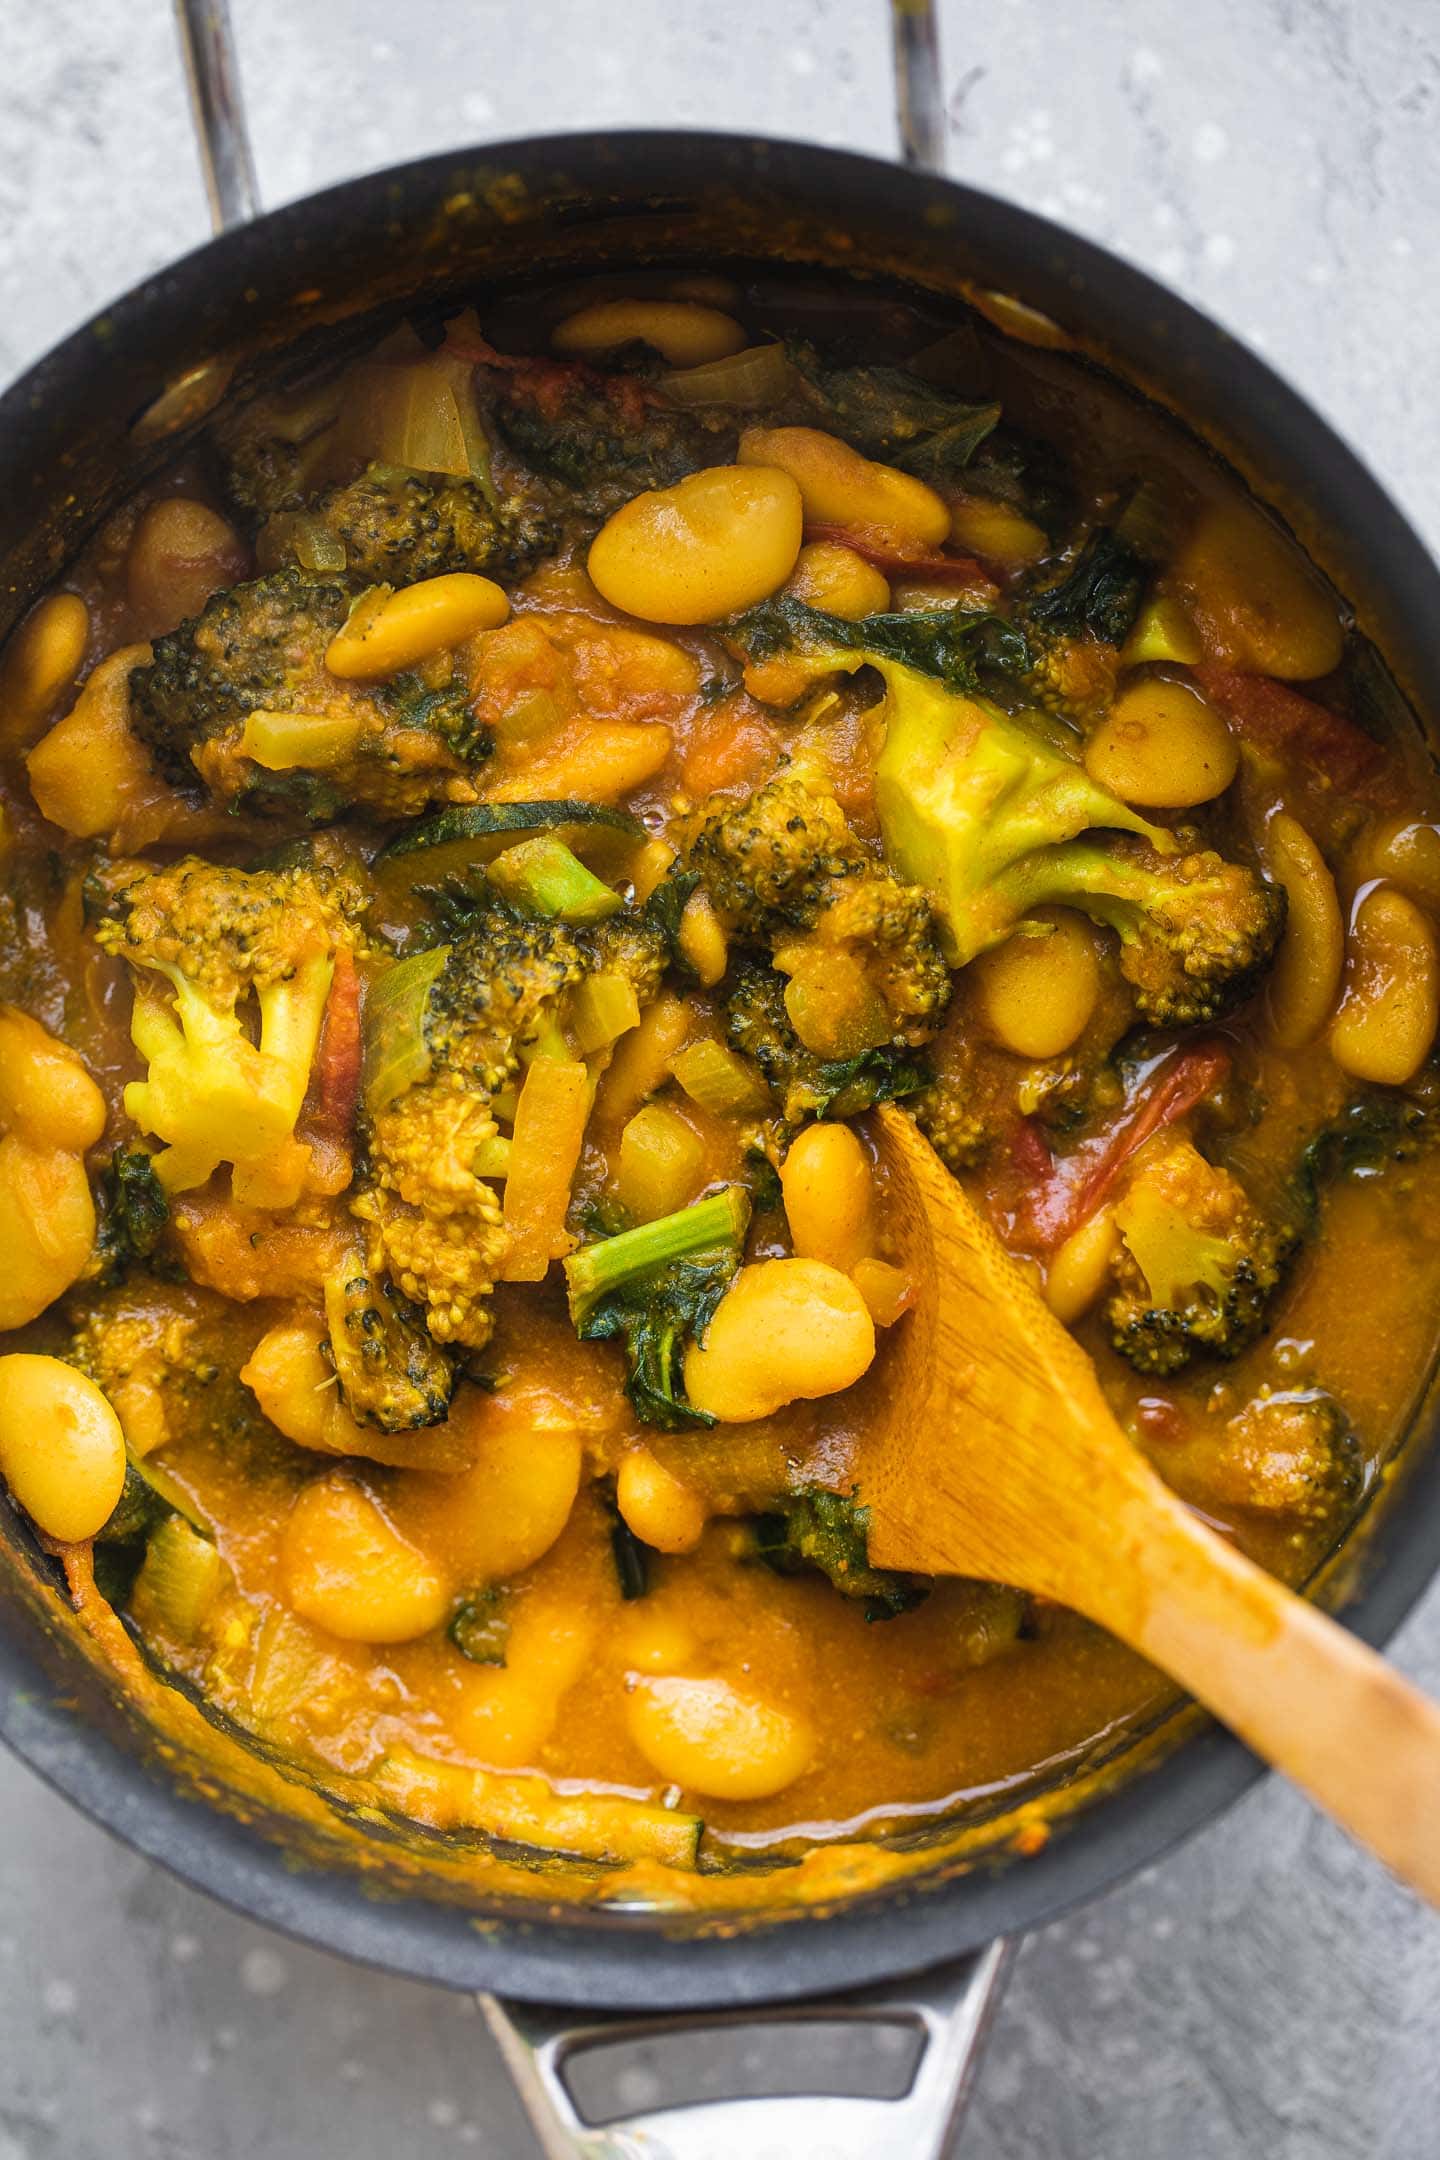 Vegetable and bean stew in a saucepan